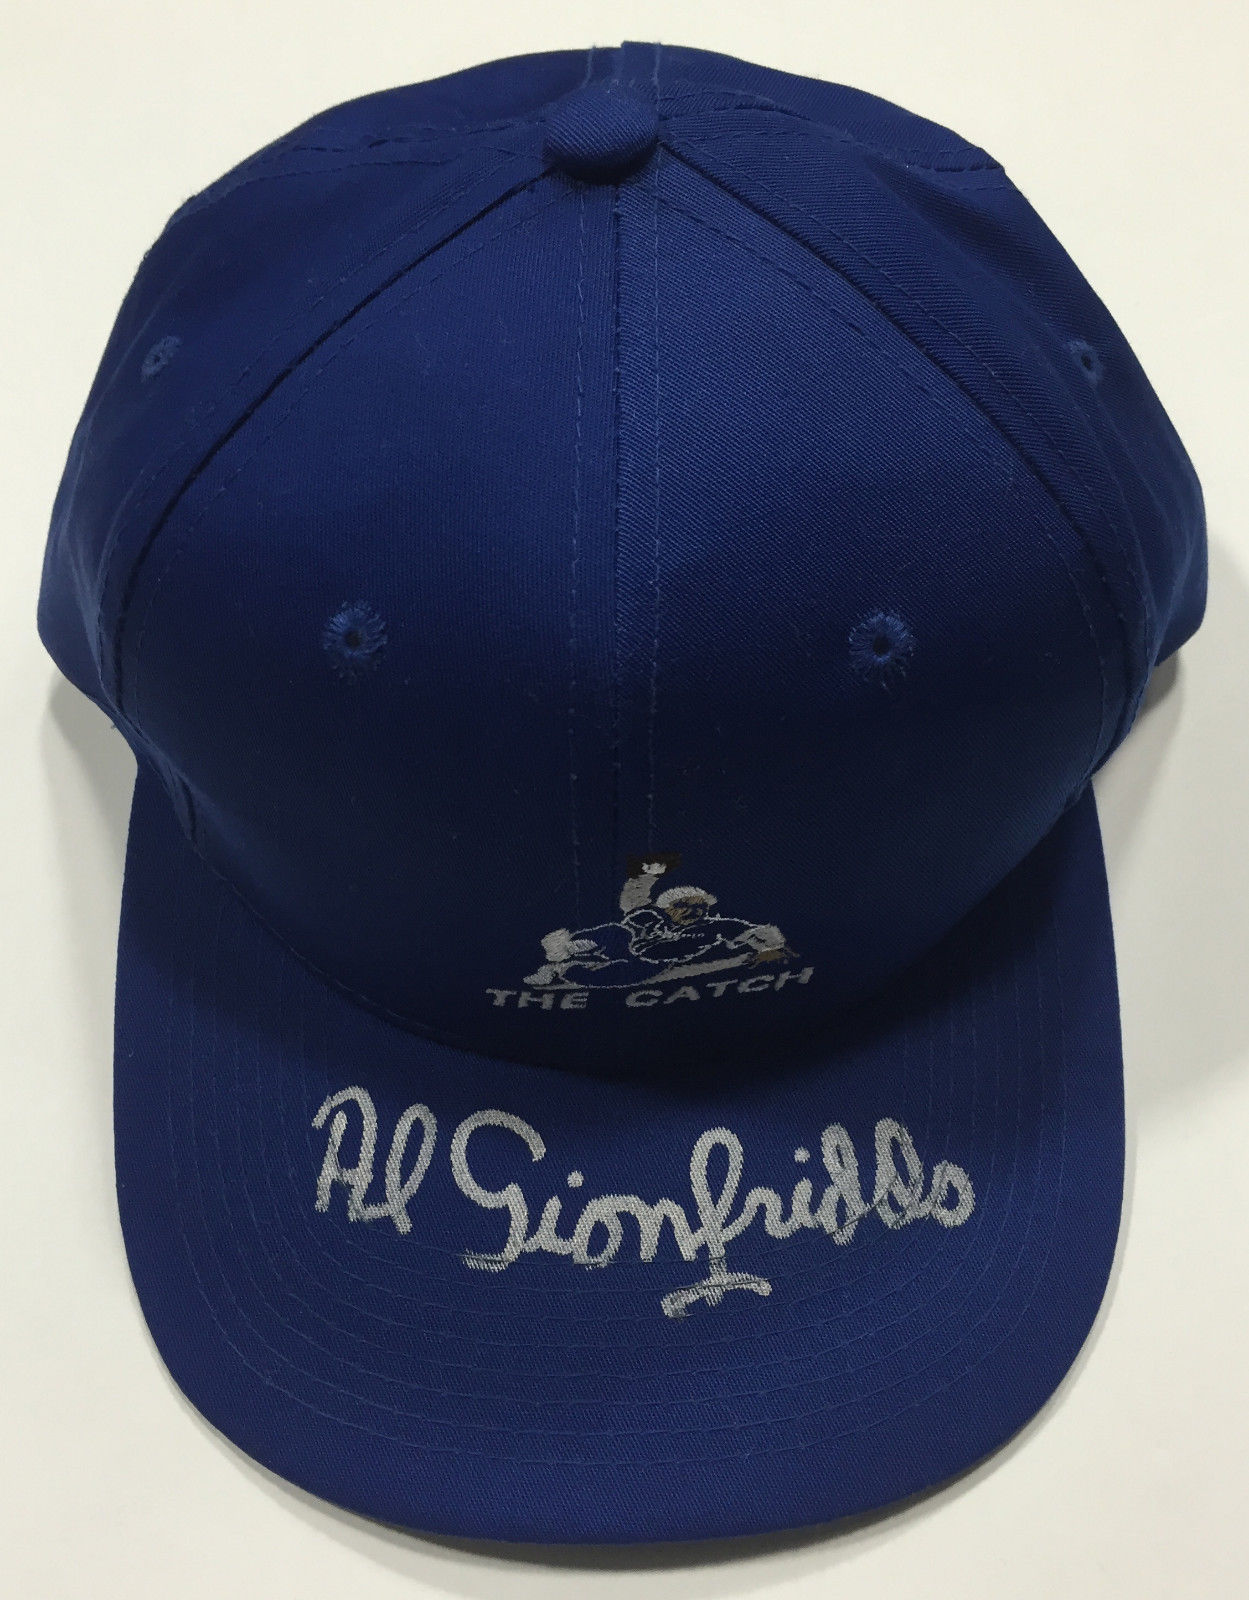 Al Gionfriddo Signed Brooklyn Dodgers 1947 WS  The Catch Hat Autograph cbm COA